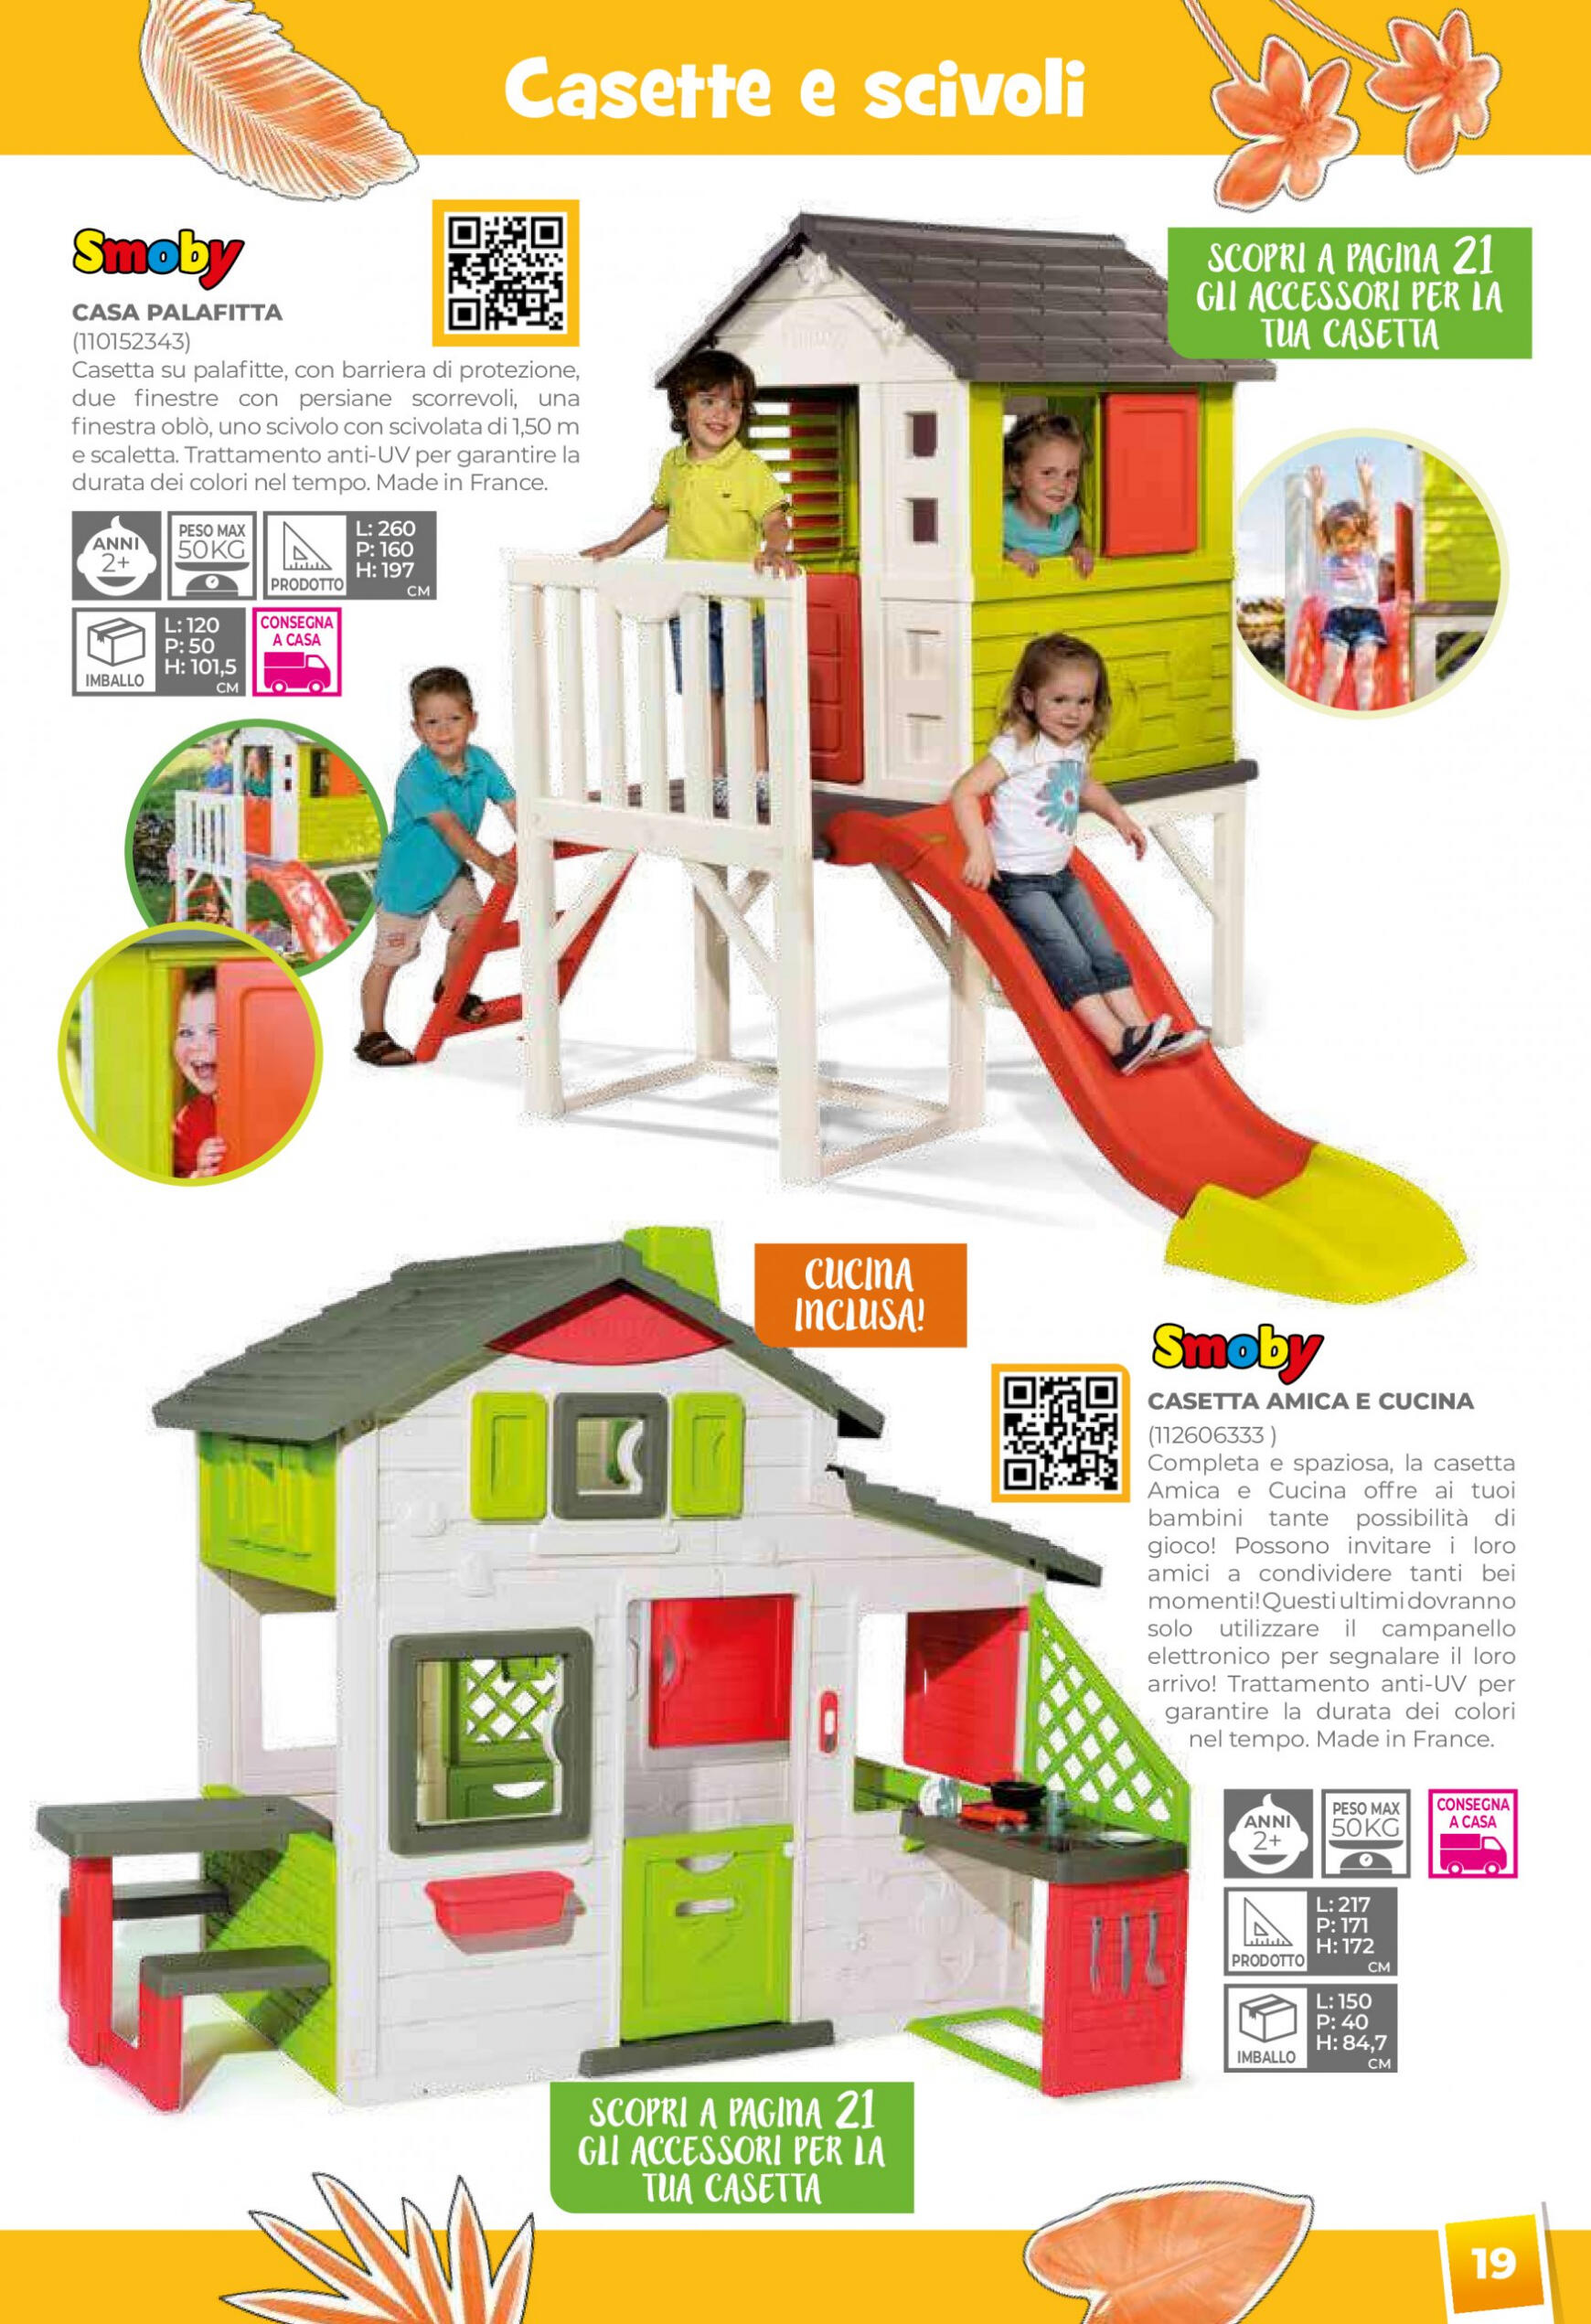 toys-center - Nuovo volantino Toys Center 01.05. - 31.12. - page: 21